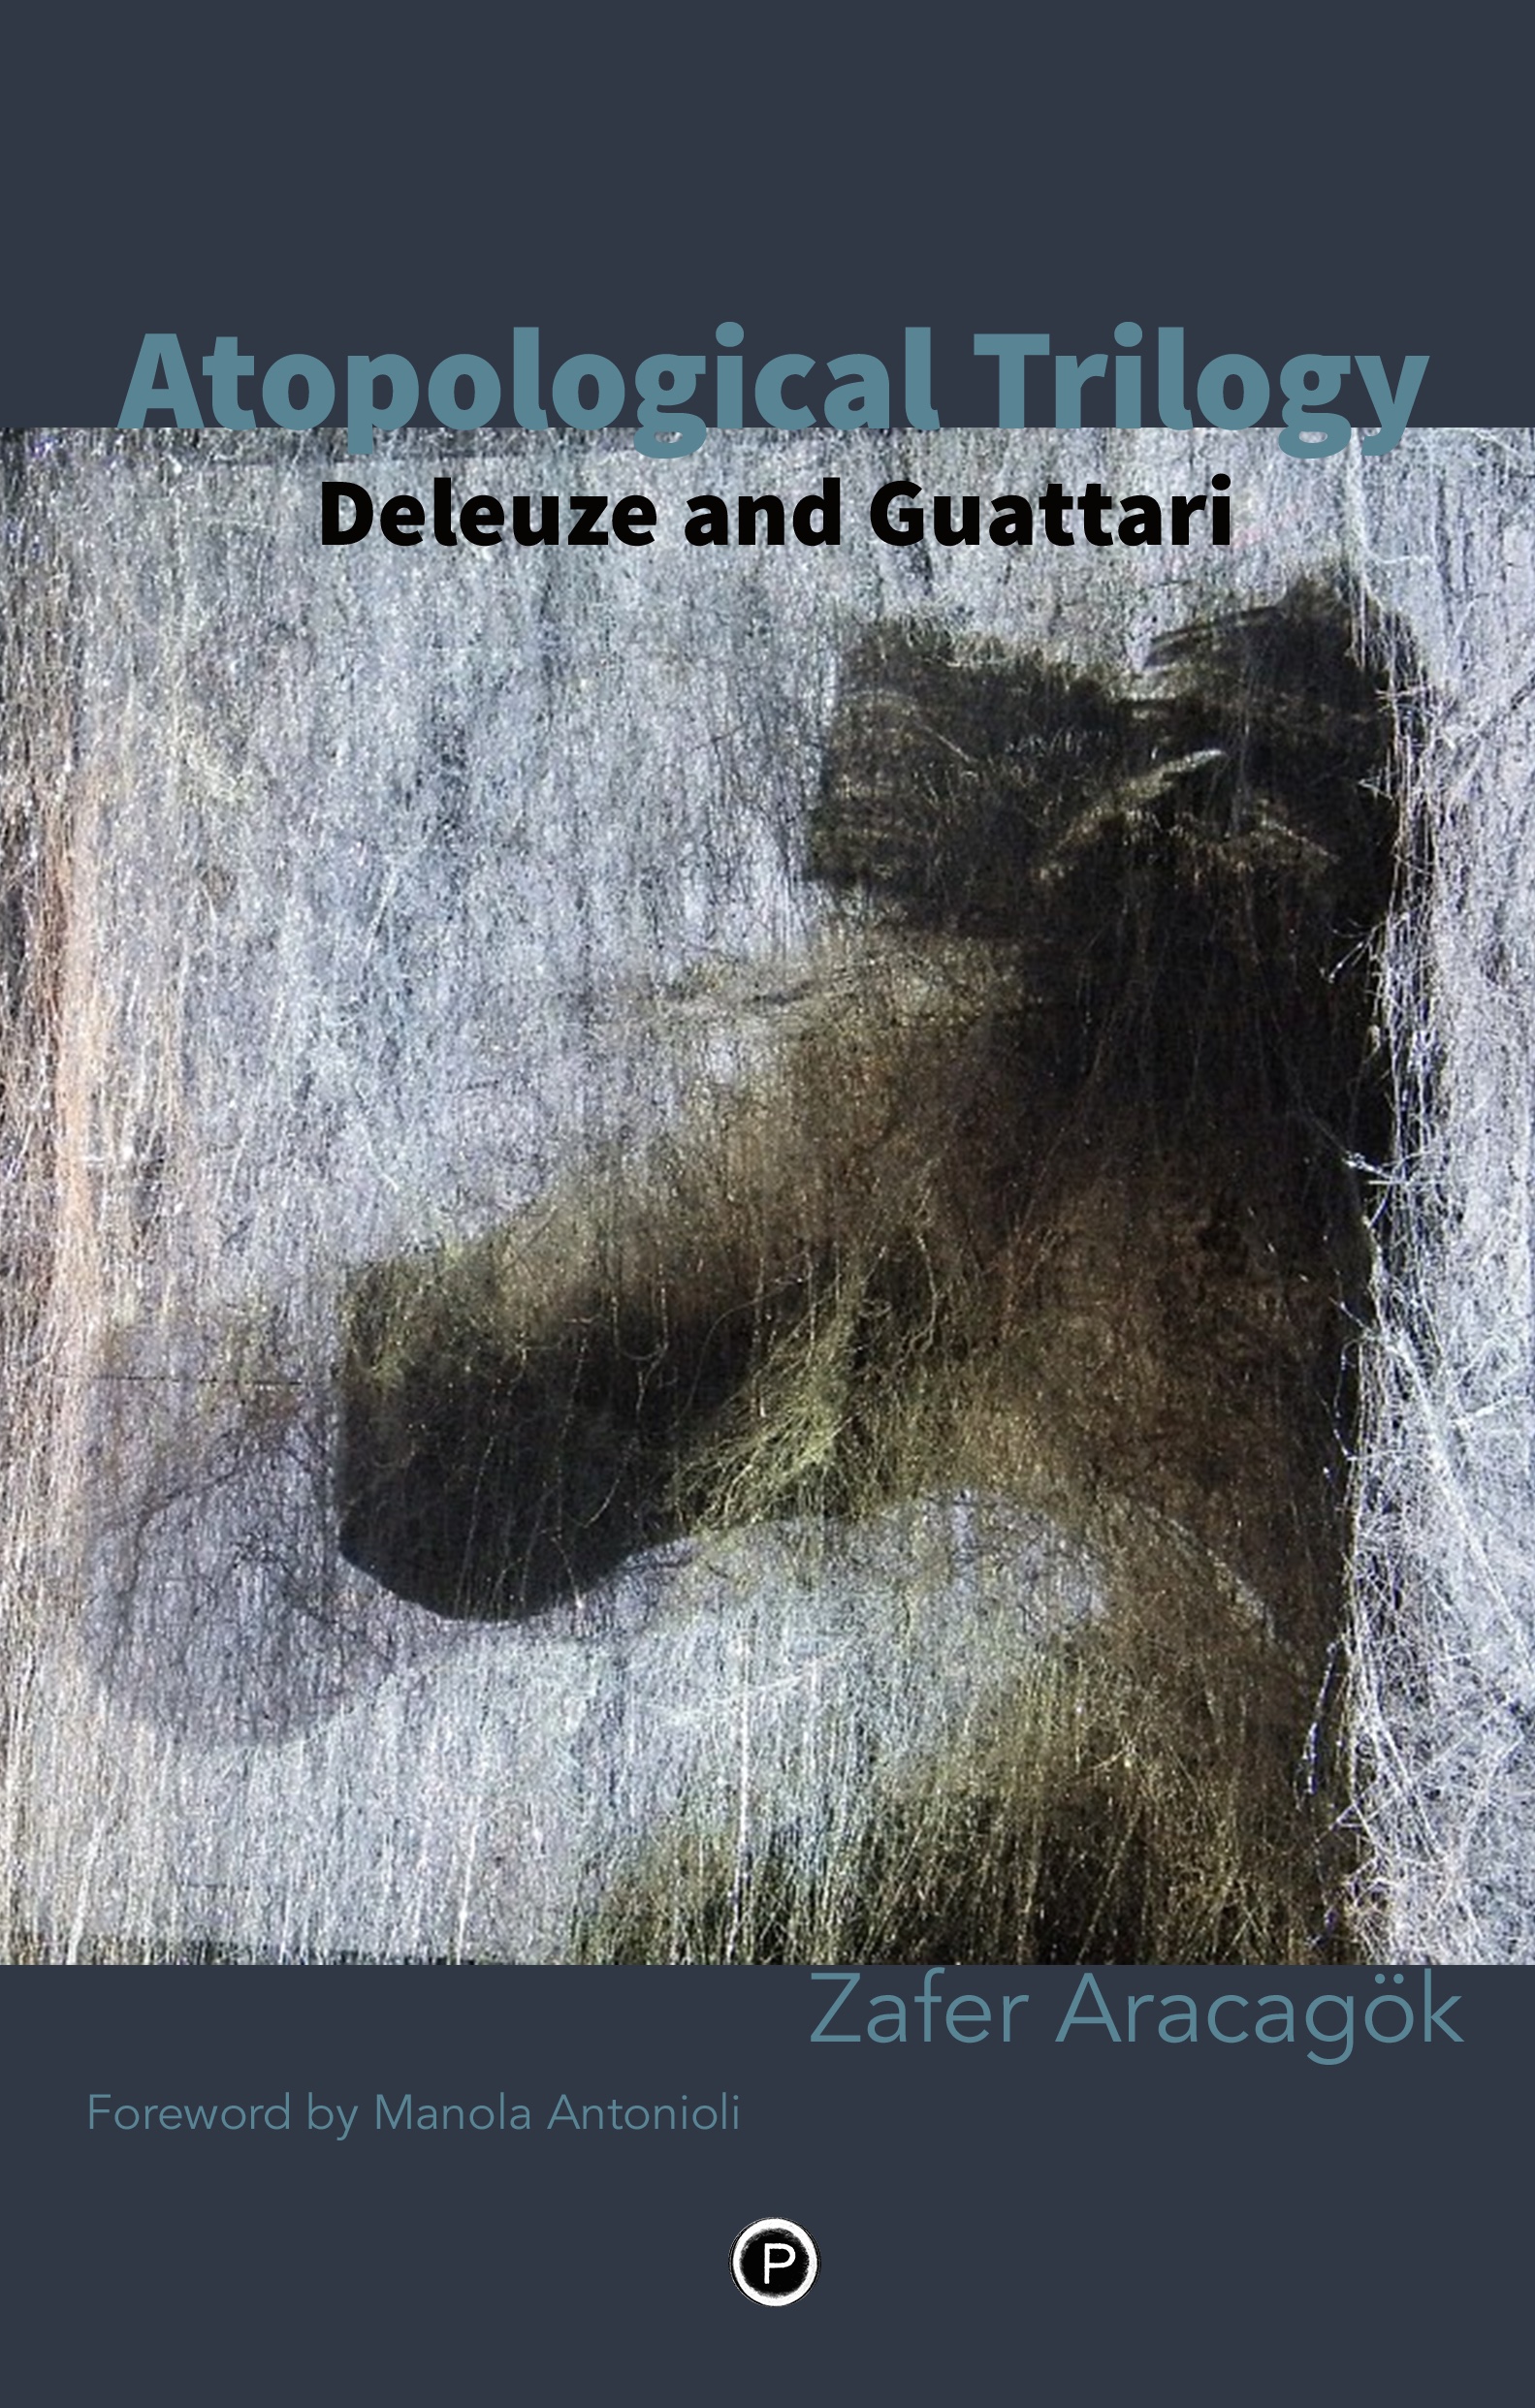 Atopological Trilogy: Deleuze and Guattari (punctum books, 2015)